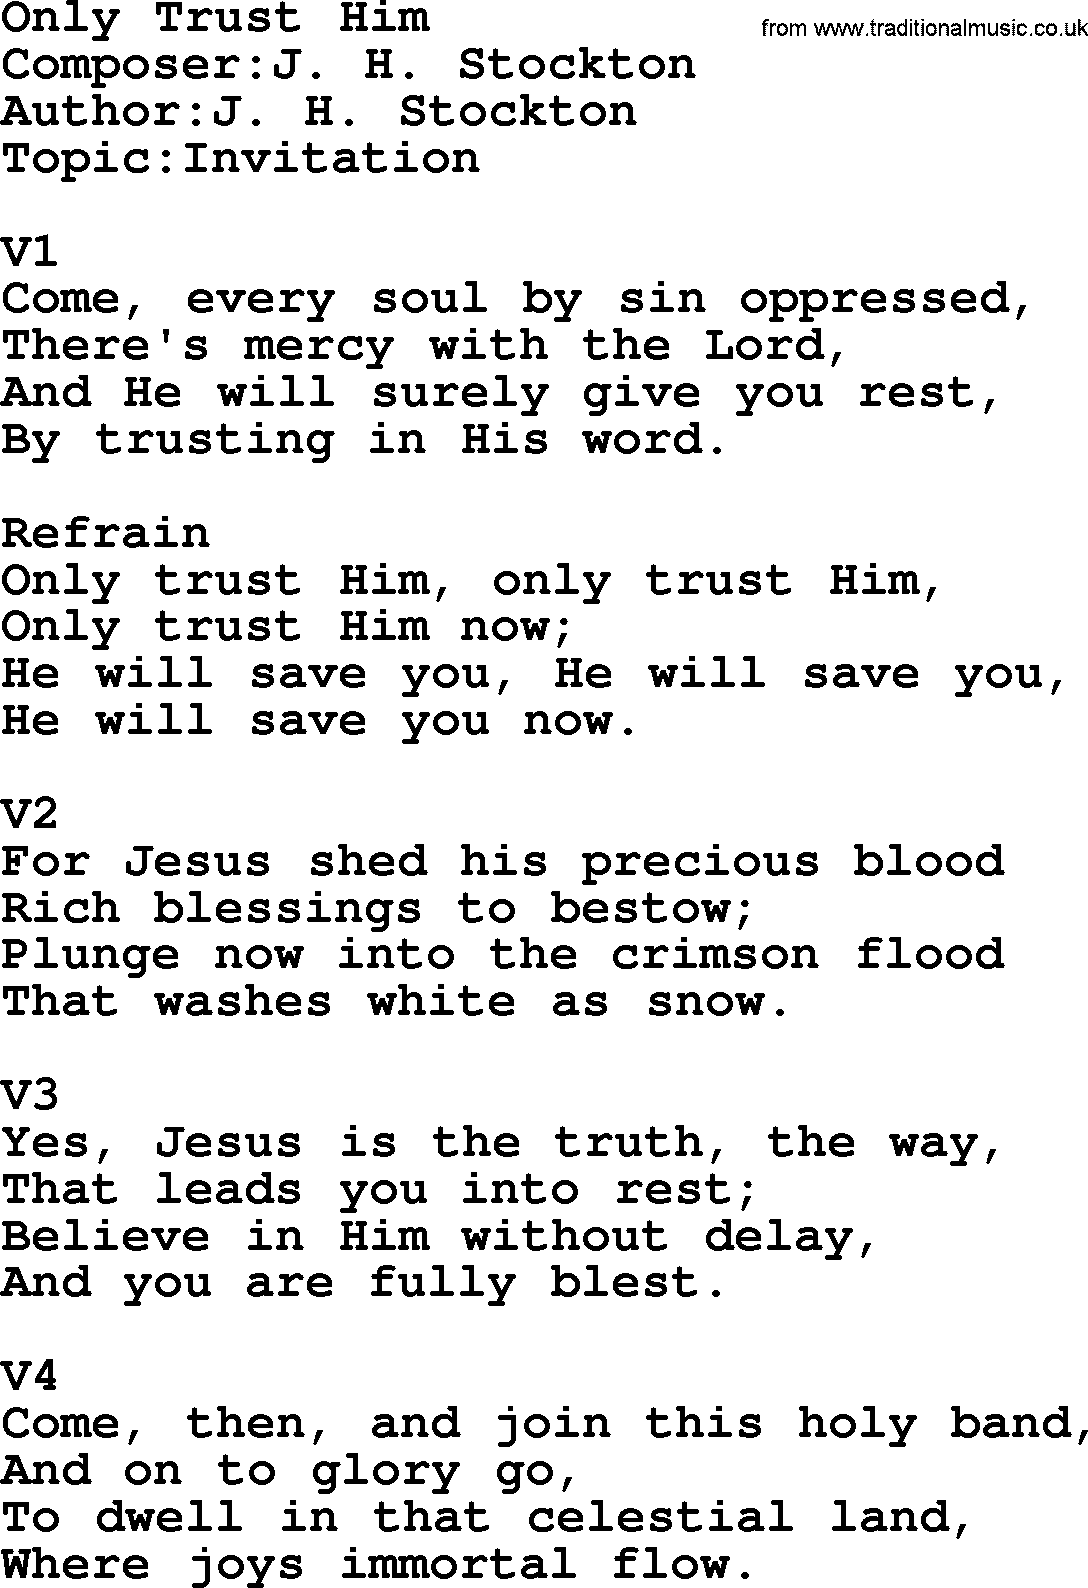 Adventist Hynms collection, Hymn: Only Trust Him, lyrics with PDF